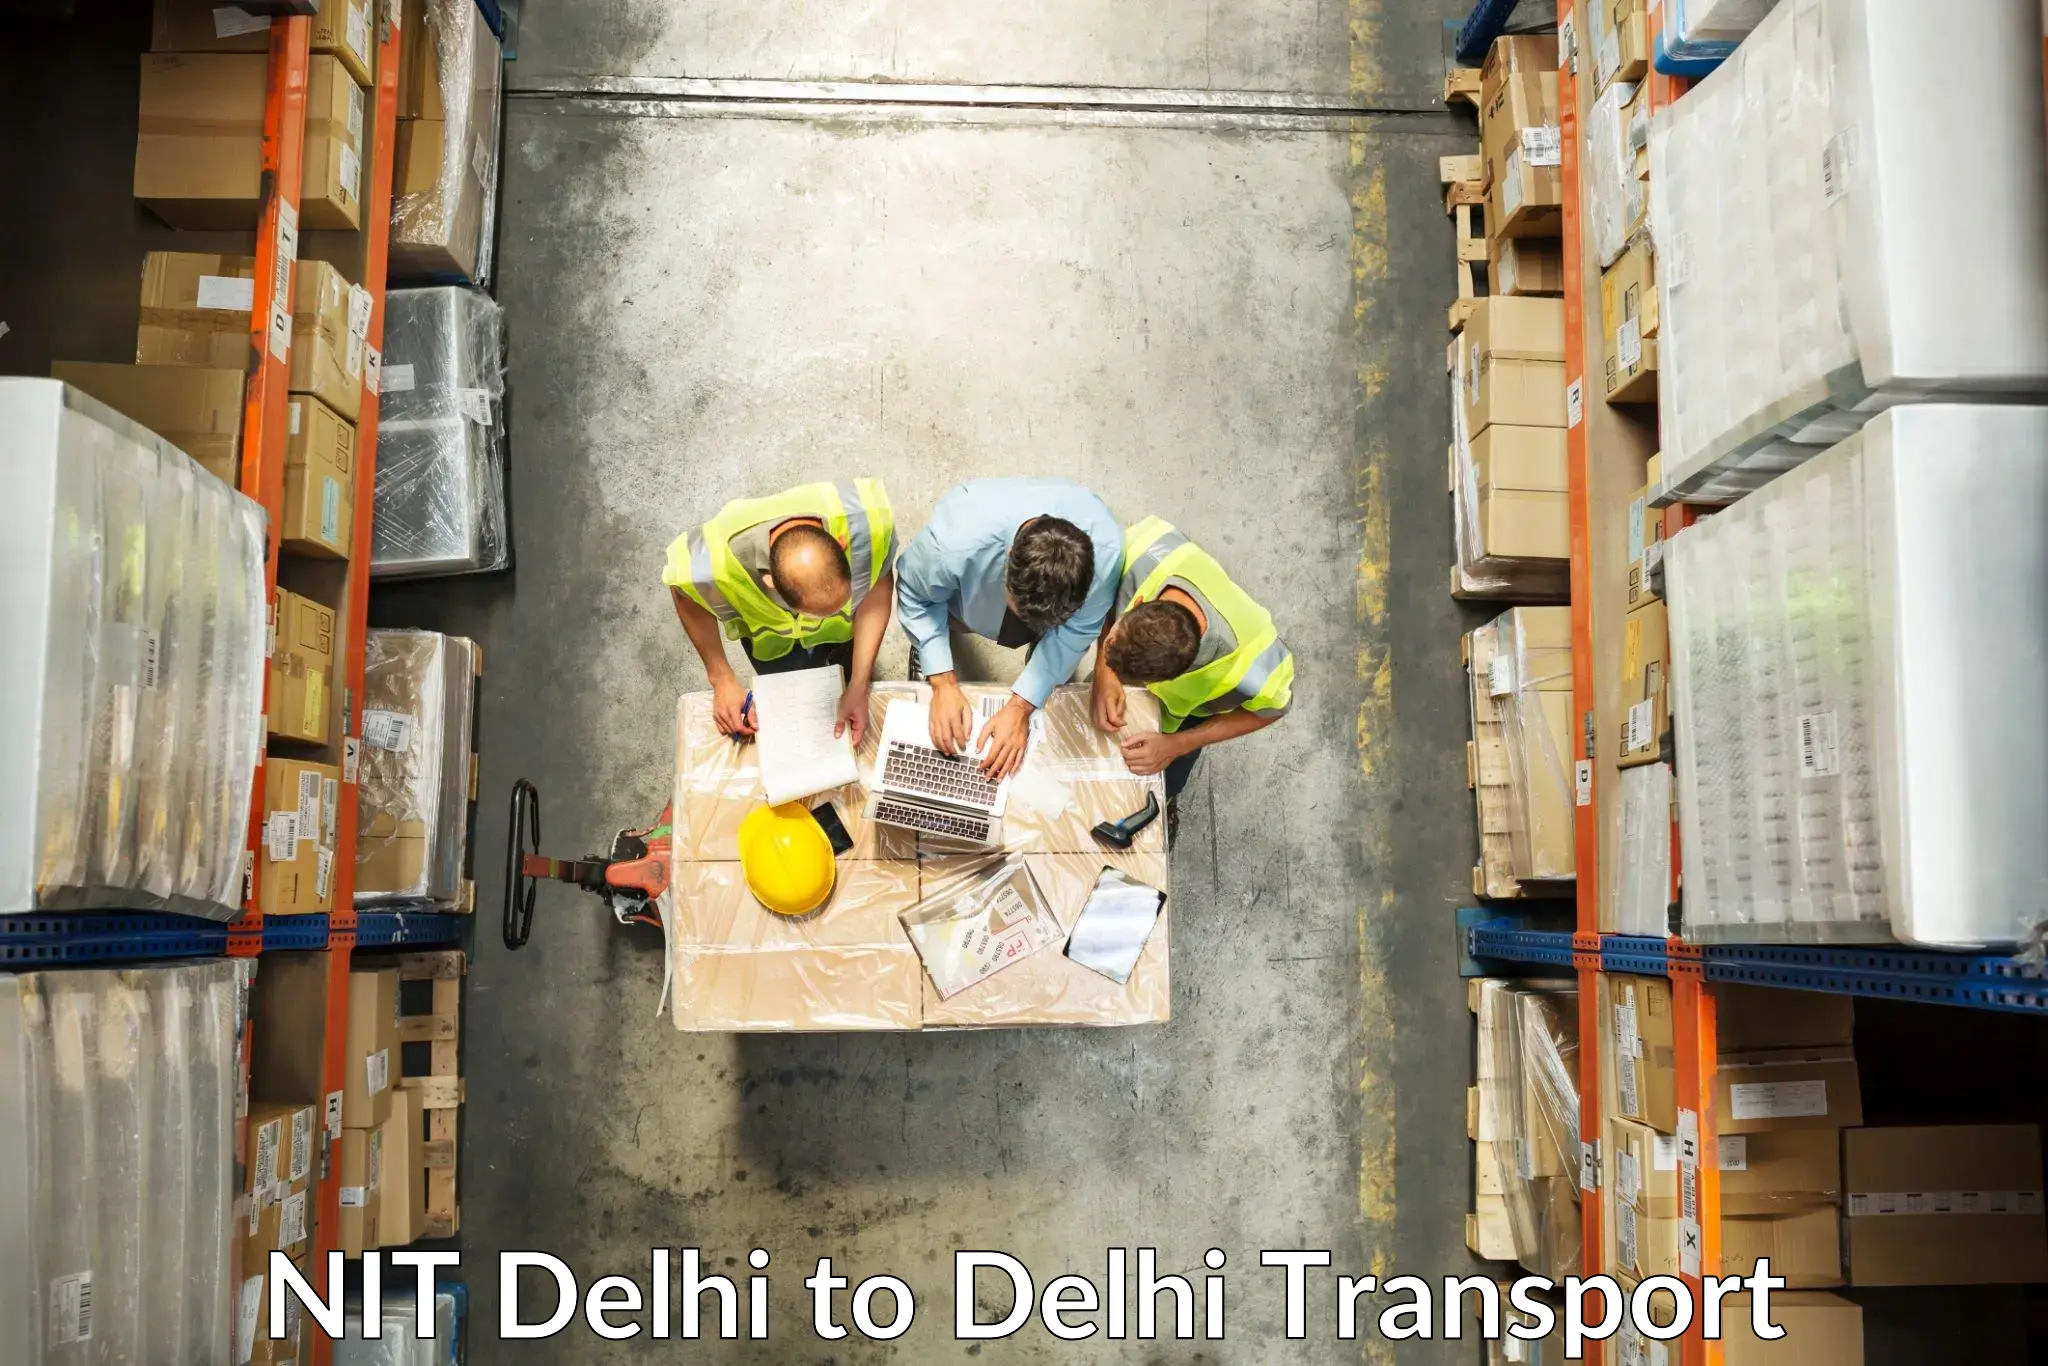 Nearby transport service NIT Delhi to Delhi